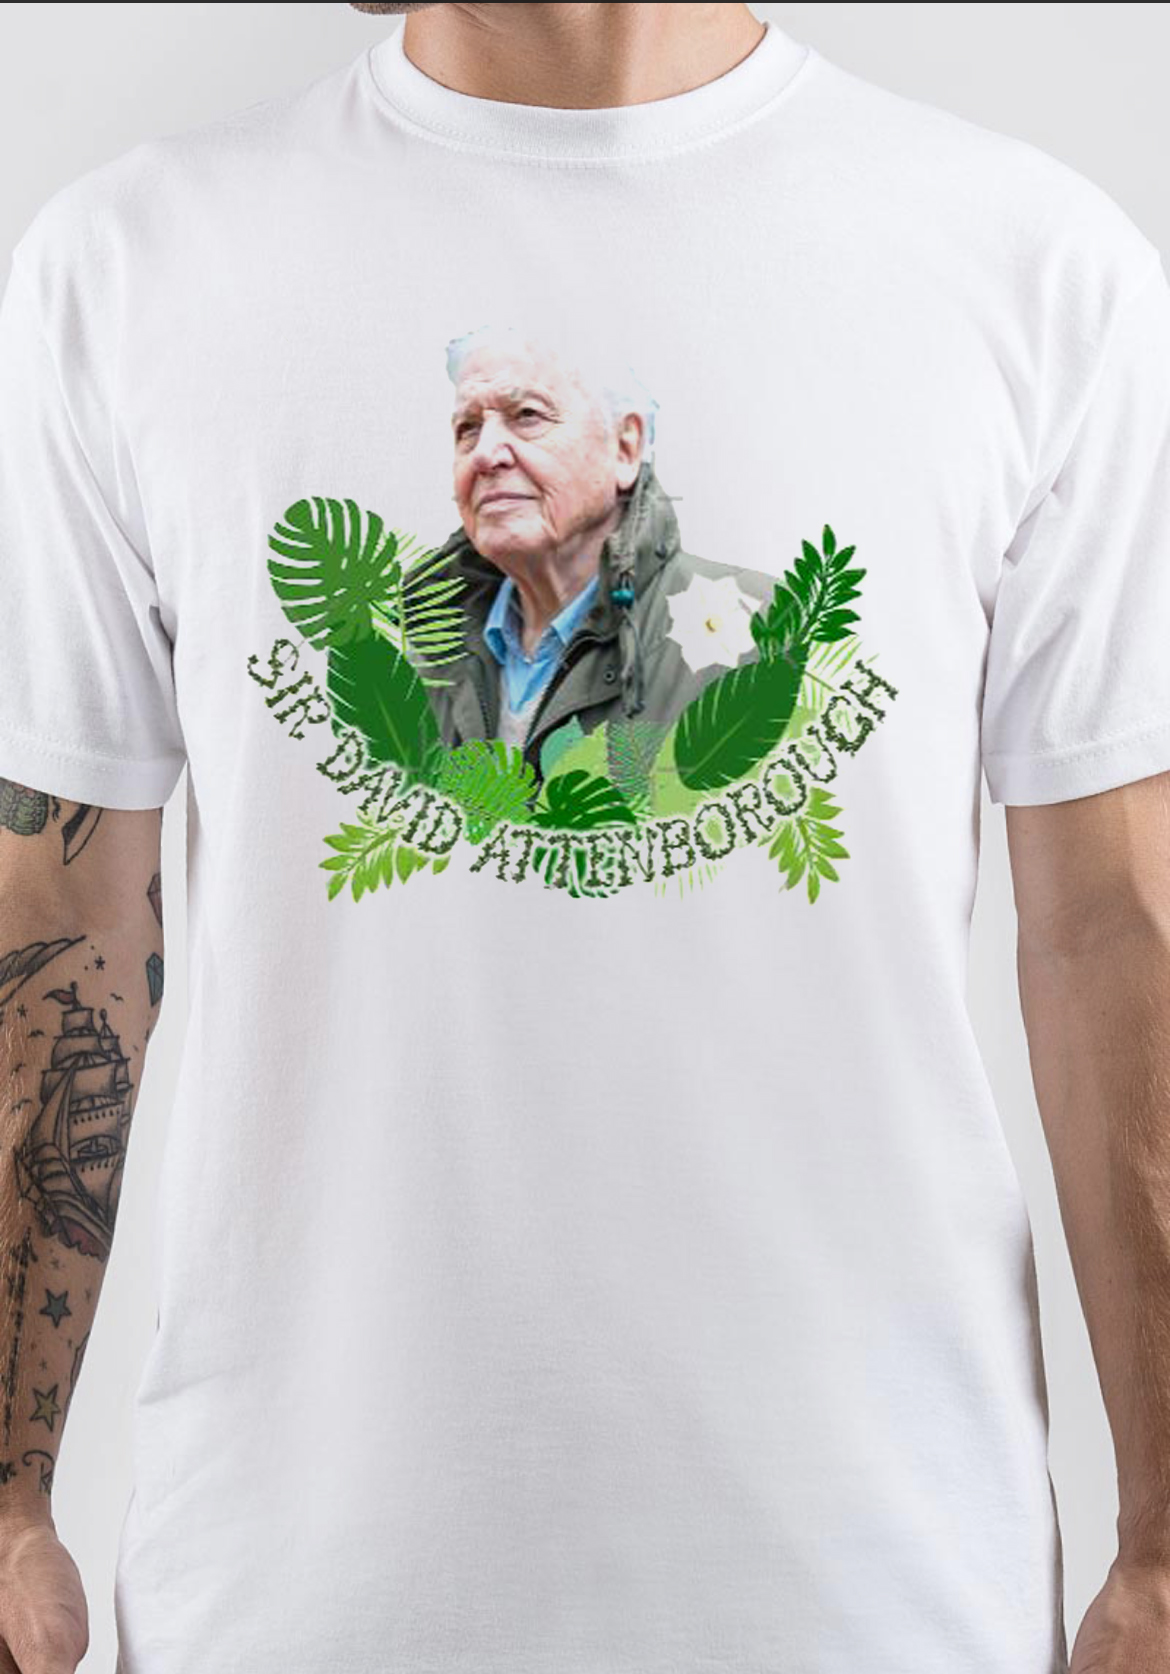 David Attenborough T-Shirt And Merchandise